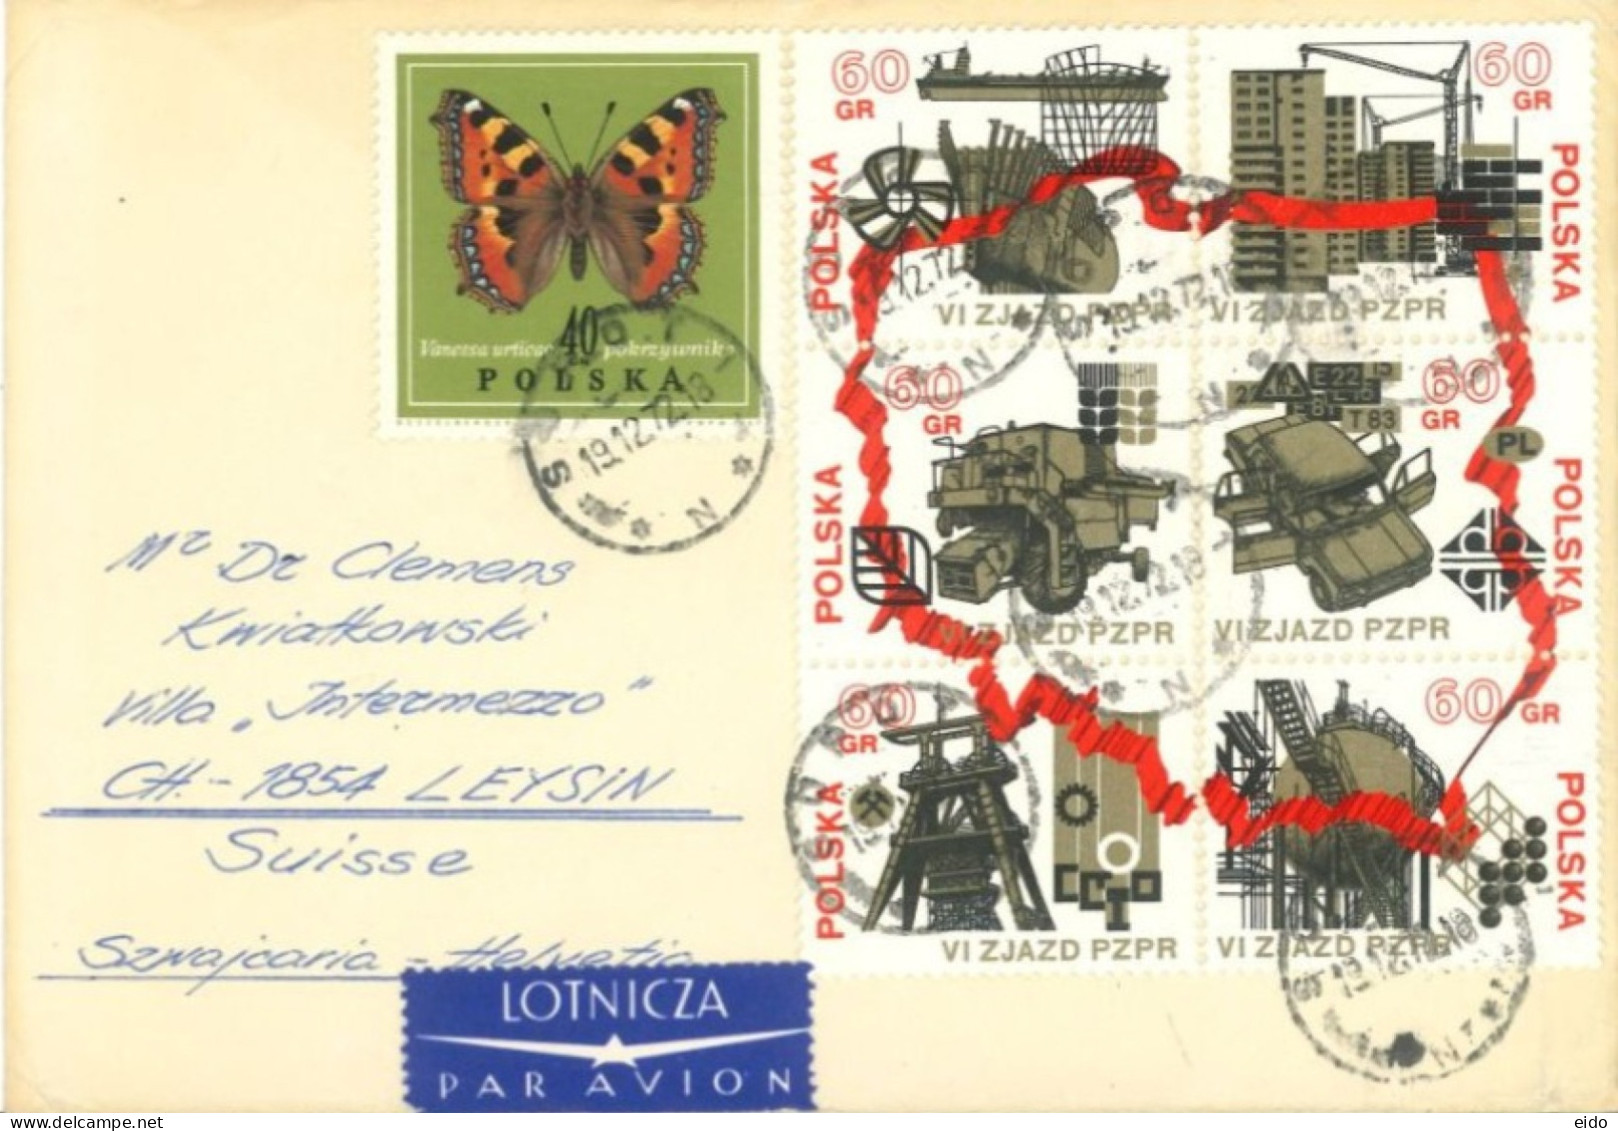 POLAND - 1972, STAMPS COVER TO SWITZERLAND. - Briefe U. Dokumente